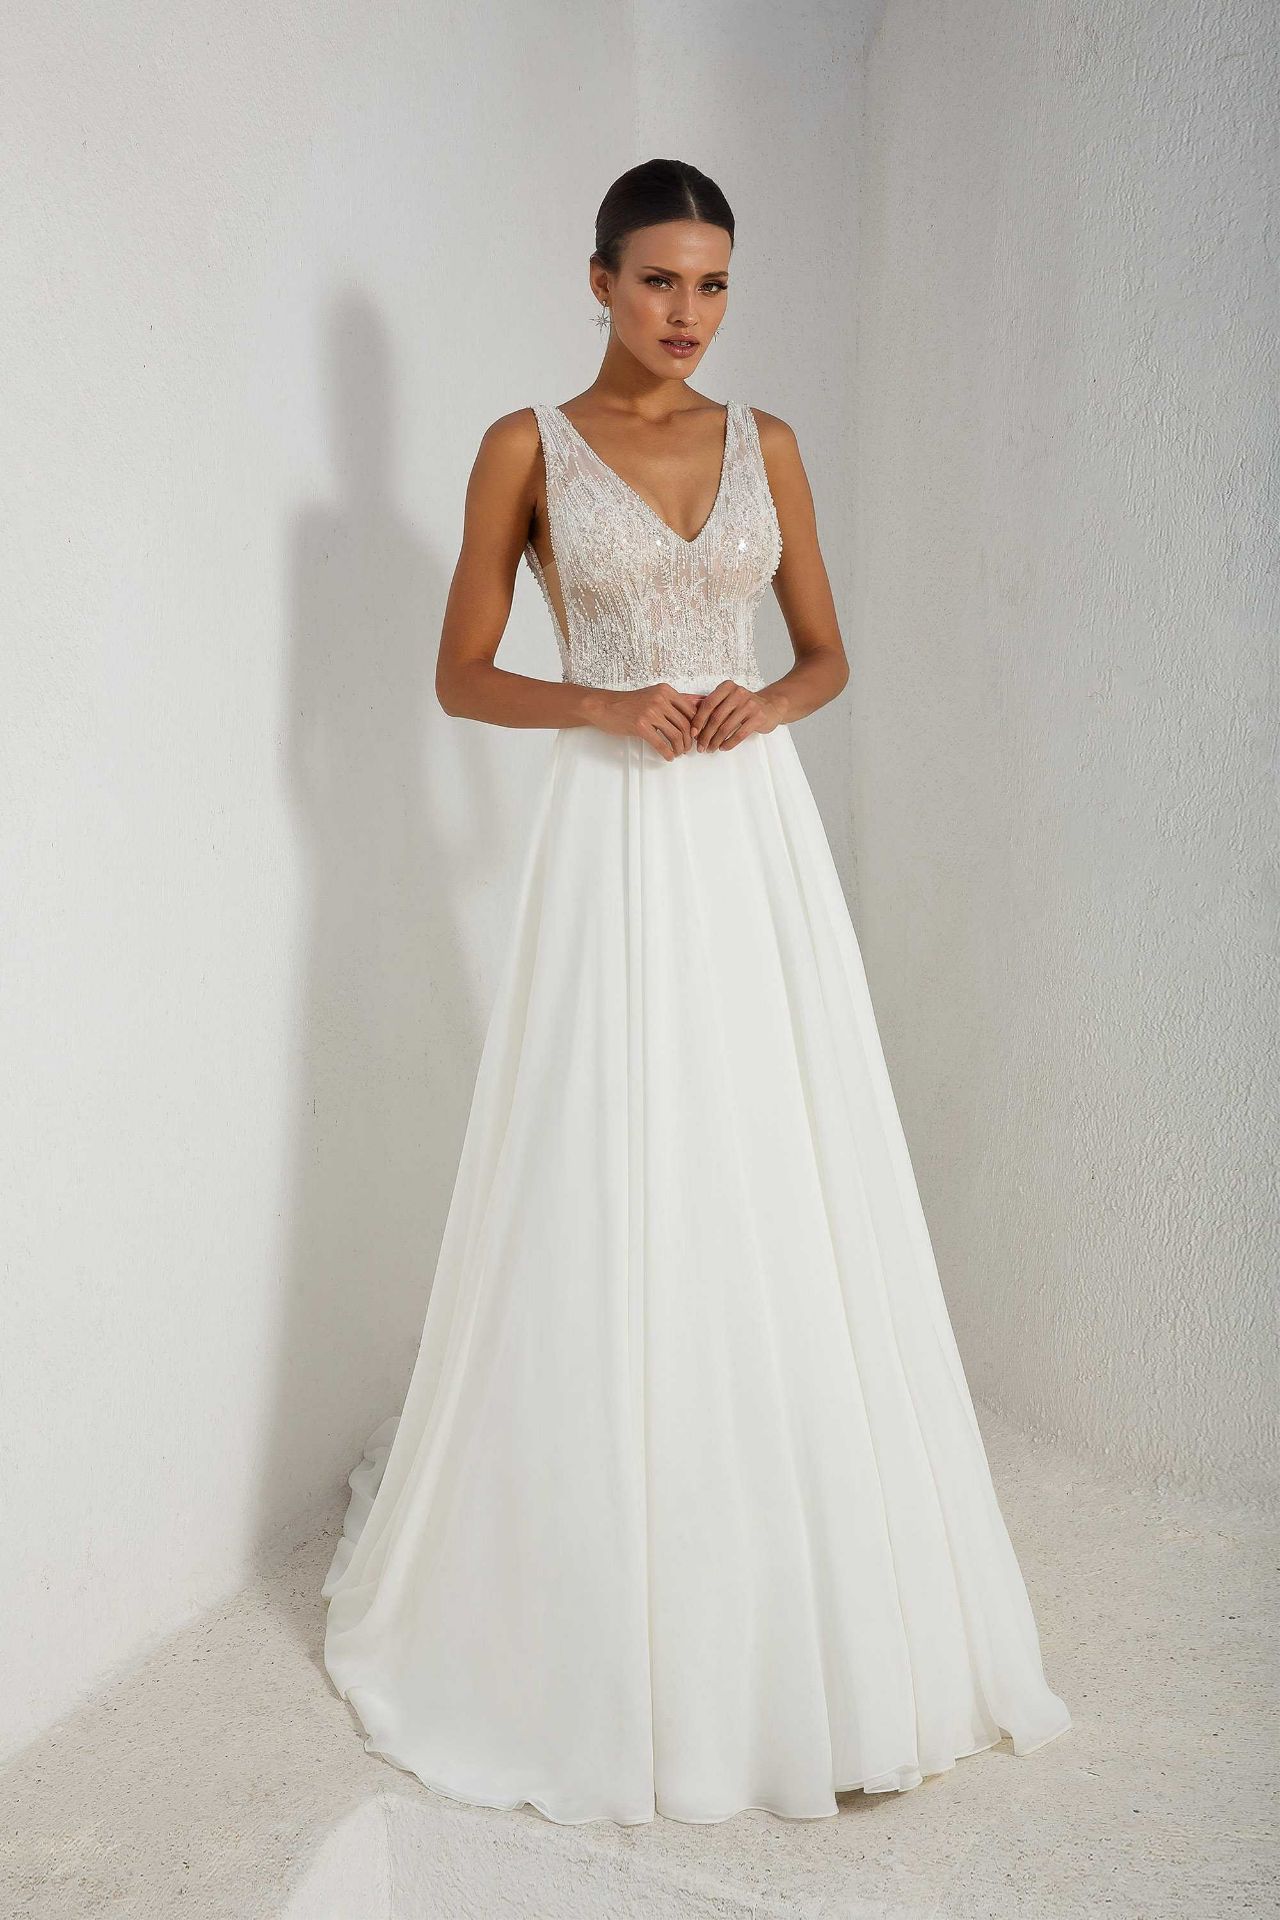 1 x Justin Alexander Designer Wedding Dress With Sheer Beaded Bodice - UK Size 10 - RRP £1,390 - Image 4 of 11